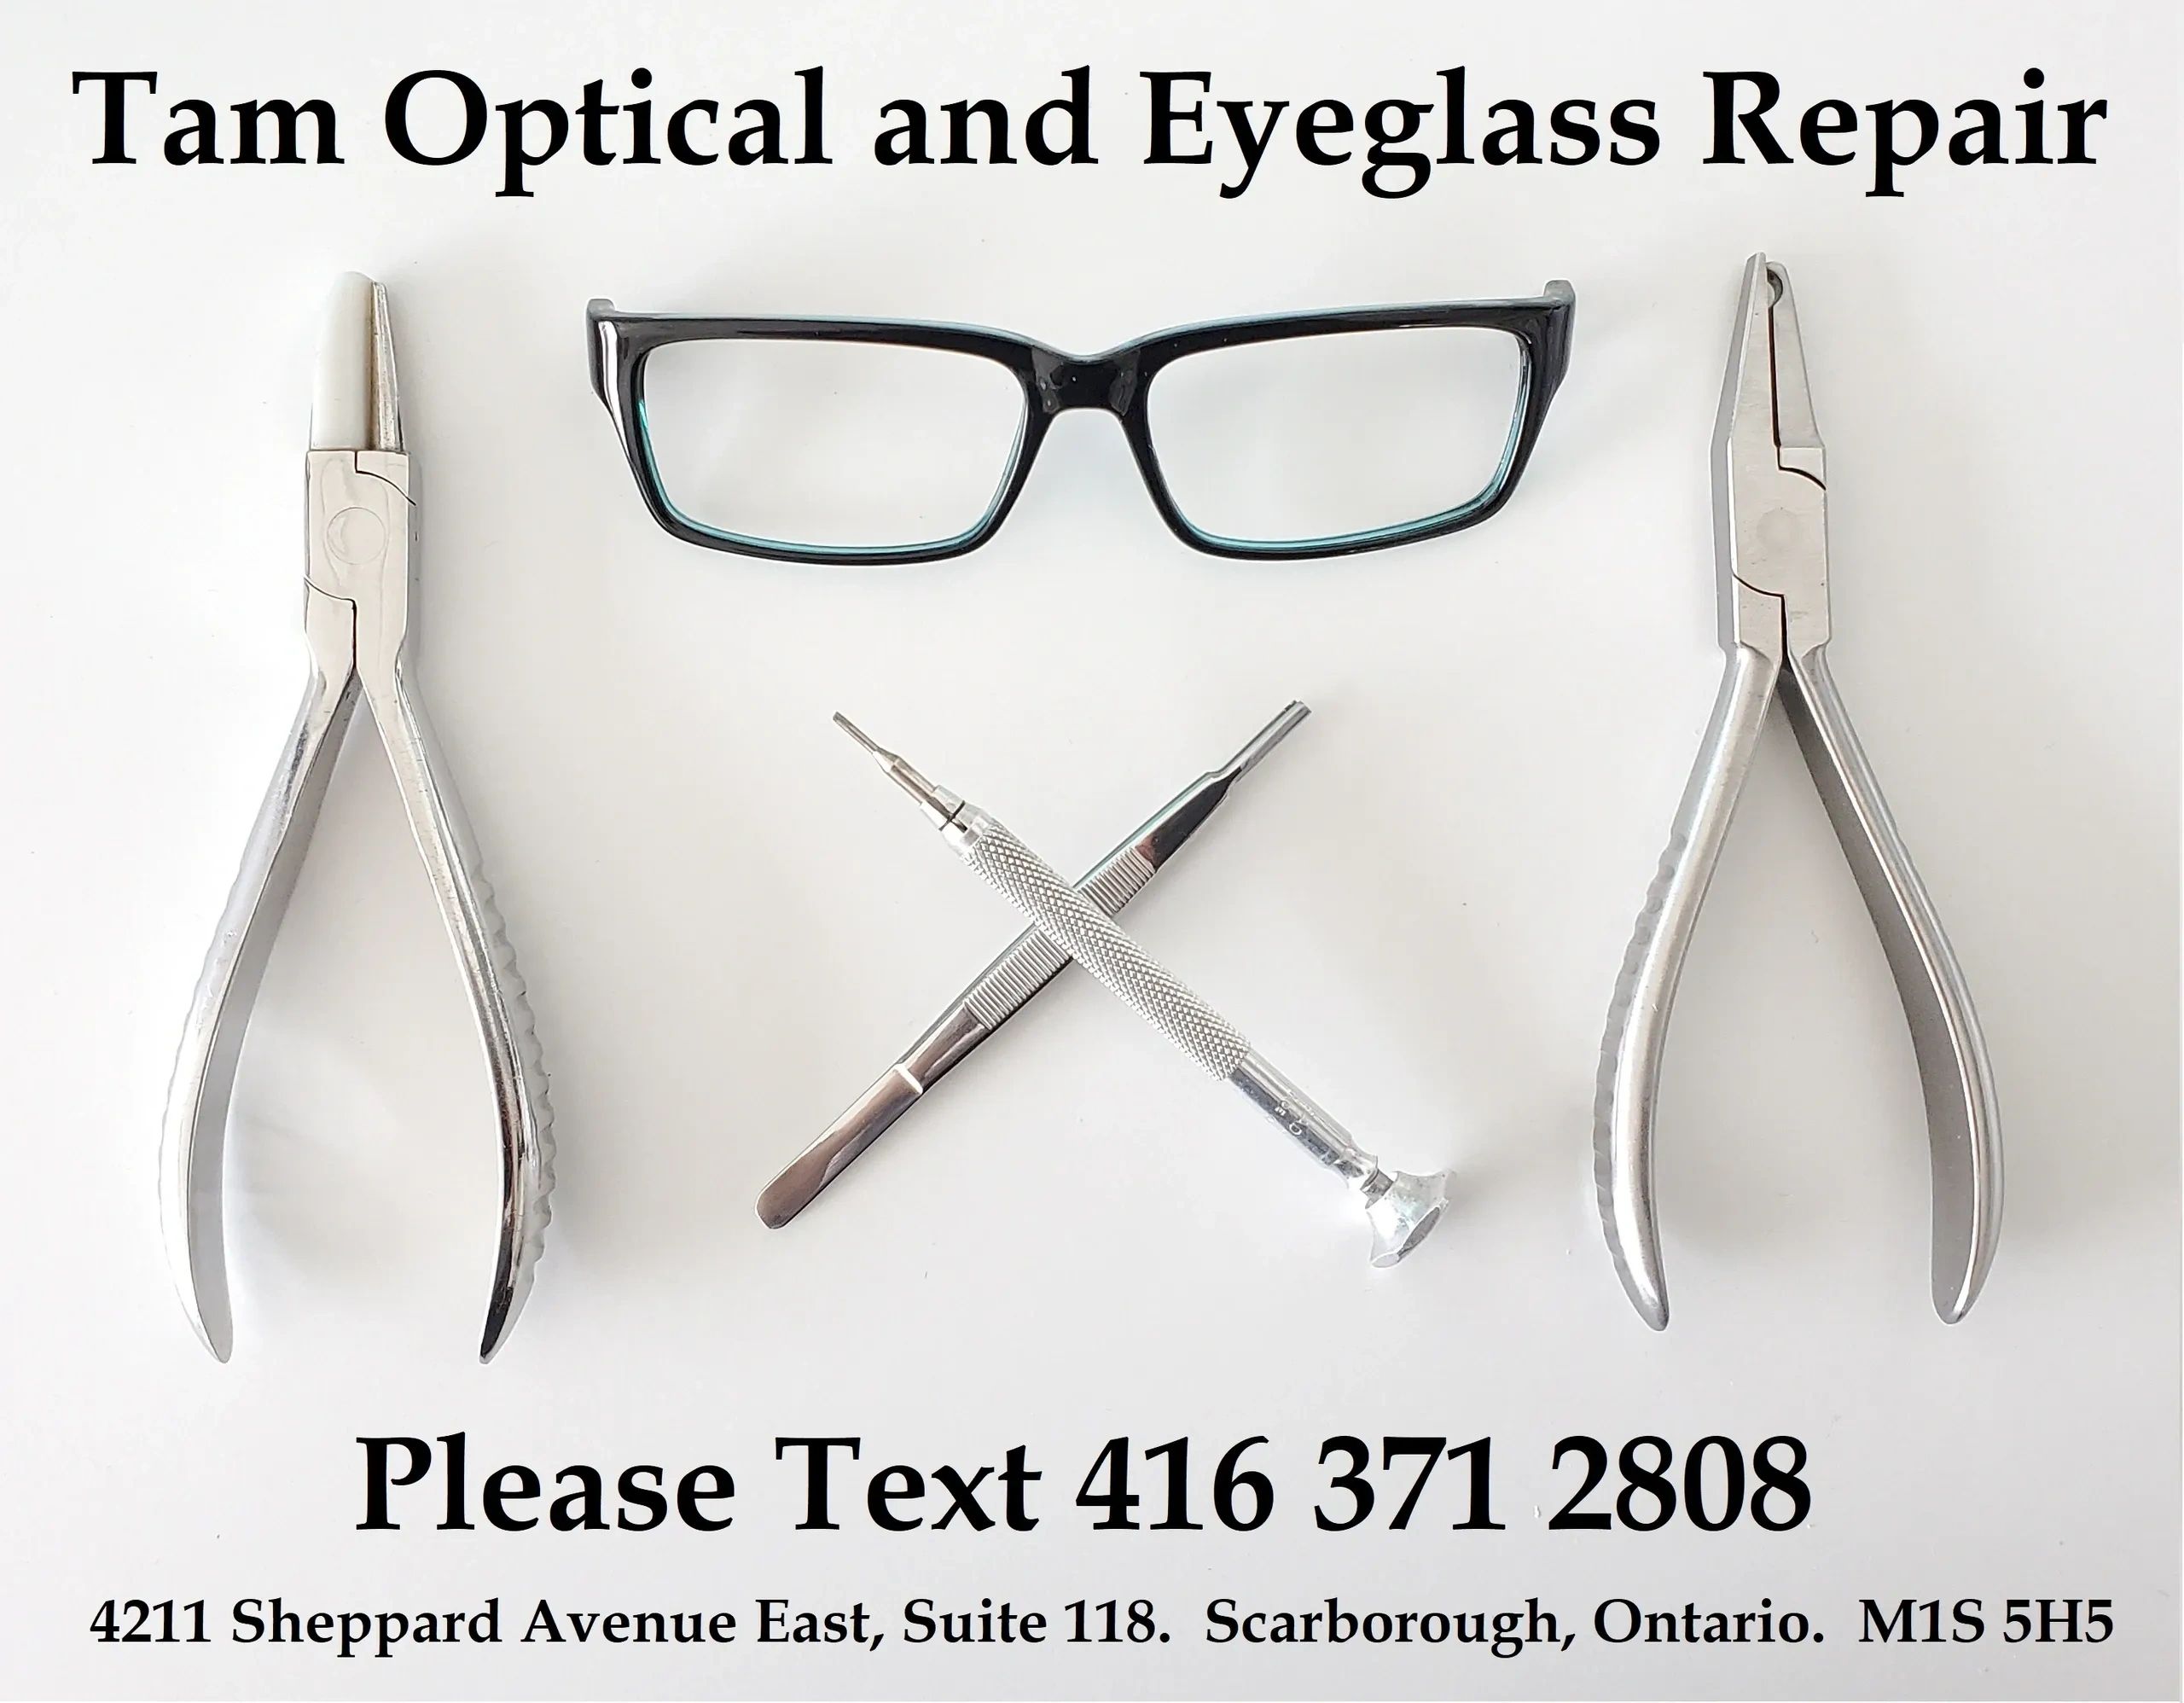 Eyeglass Repair Shop - Eyeglass Repair, Sun Glass Repair, Broken Glasses,  Fix Eye Glasses, Scratched Lenses, Eye Glass Repair, New Eyeglasses, Eye  Exam, Sunglasses, Sunglass Repair,, Affordable, Same Day, Eyeglass Repair,  Eye